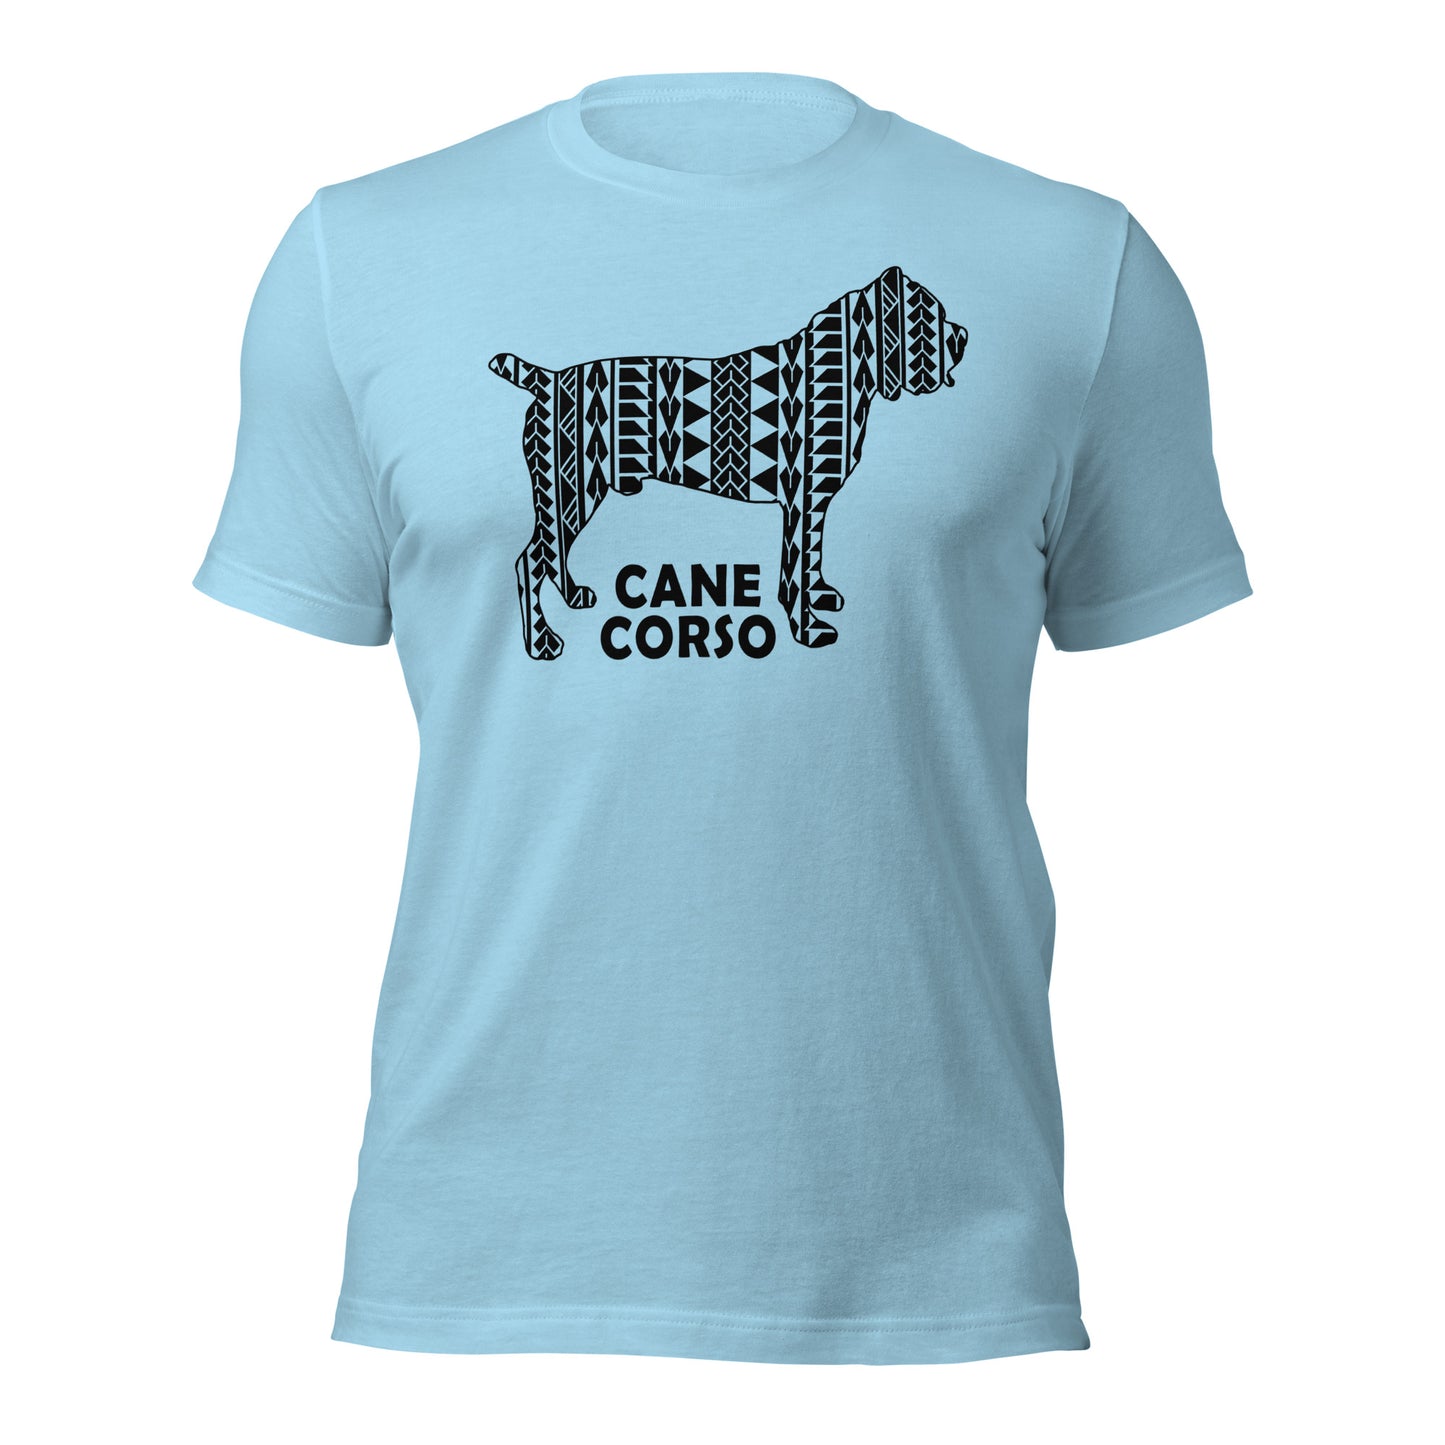 Cane Corso Polynesian t-shirt blue by Dog Artistry.